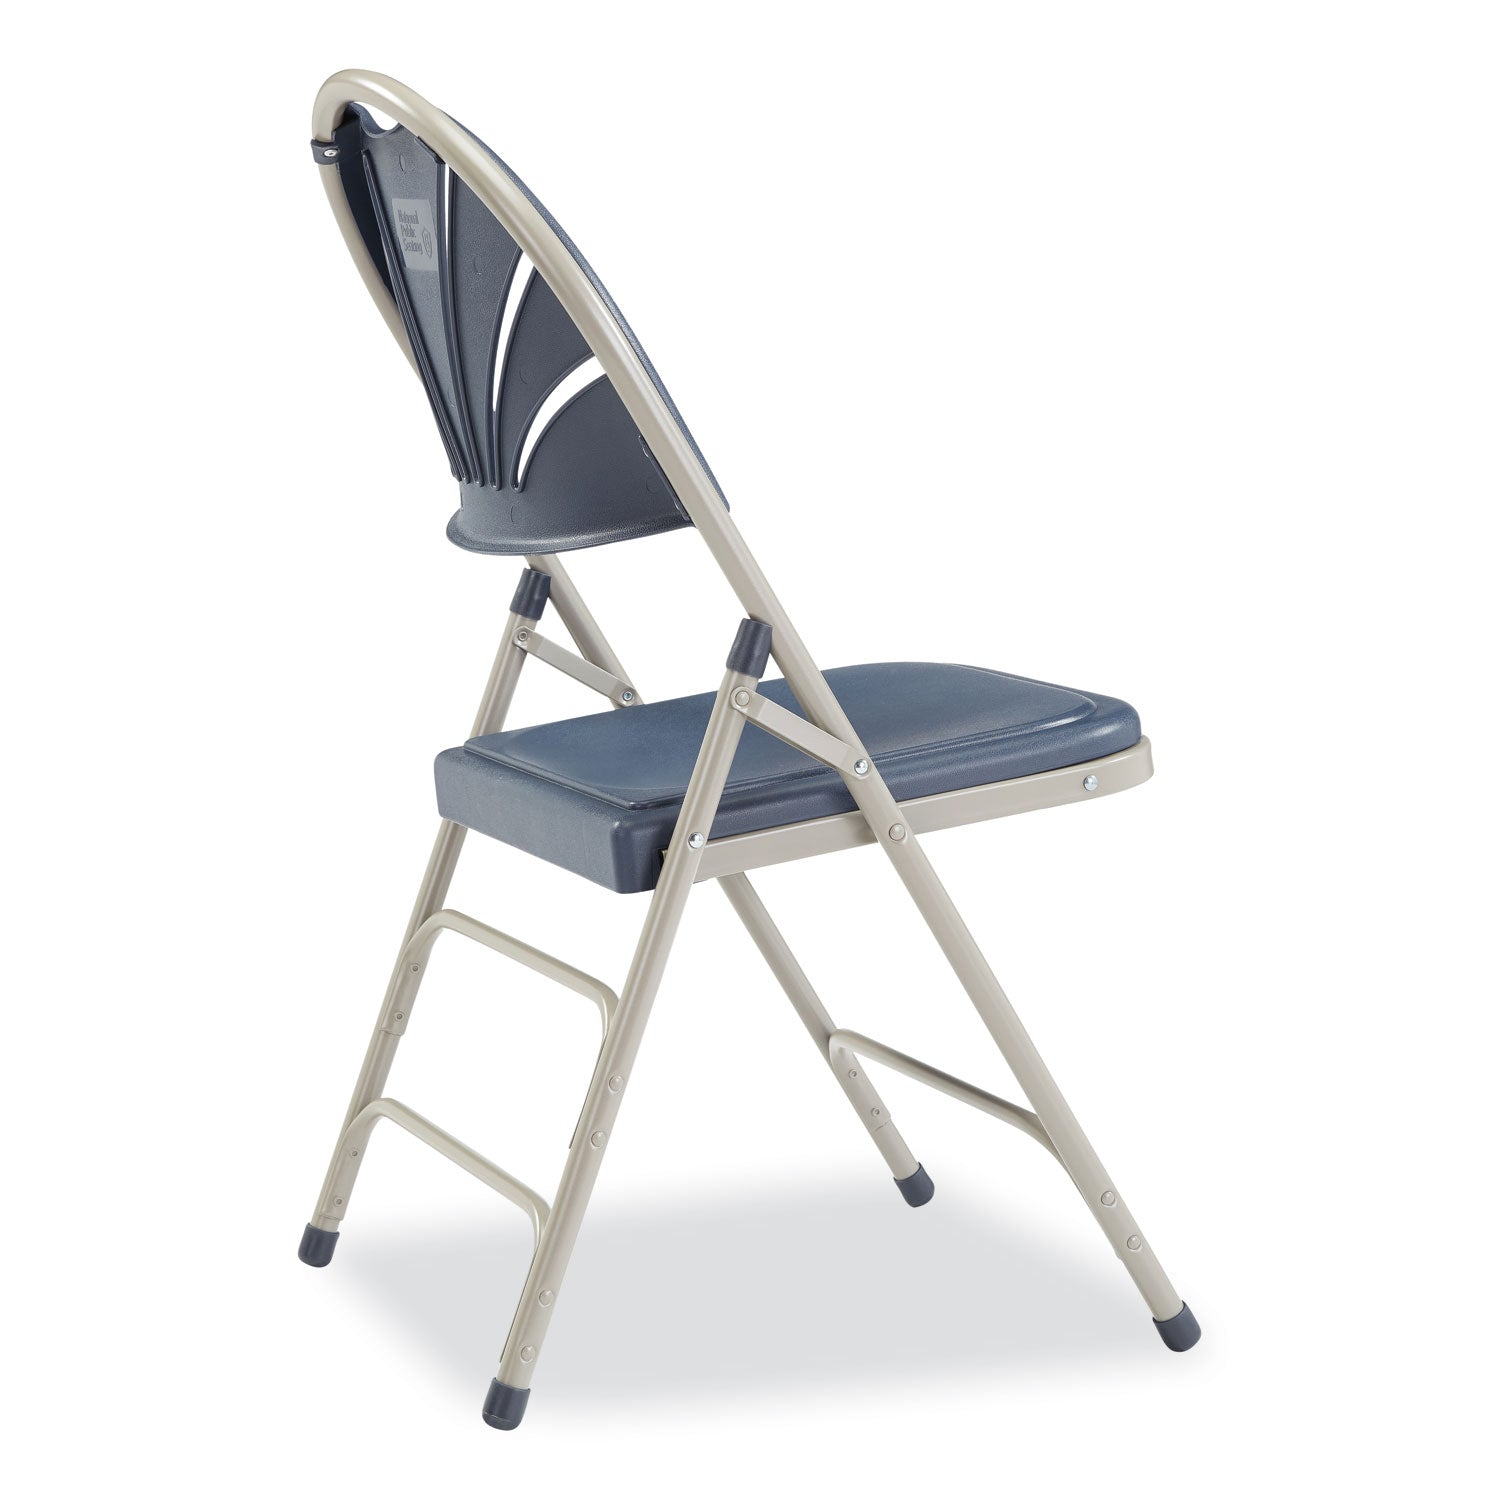 1100-series-deluxe-fan-back-tri-brace-folding-chair-supports-500-lb-dk-blue-seat-back-gray-base4-ctships-in-1-3-bus-days_nps1115 - 4